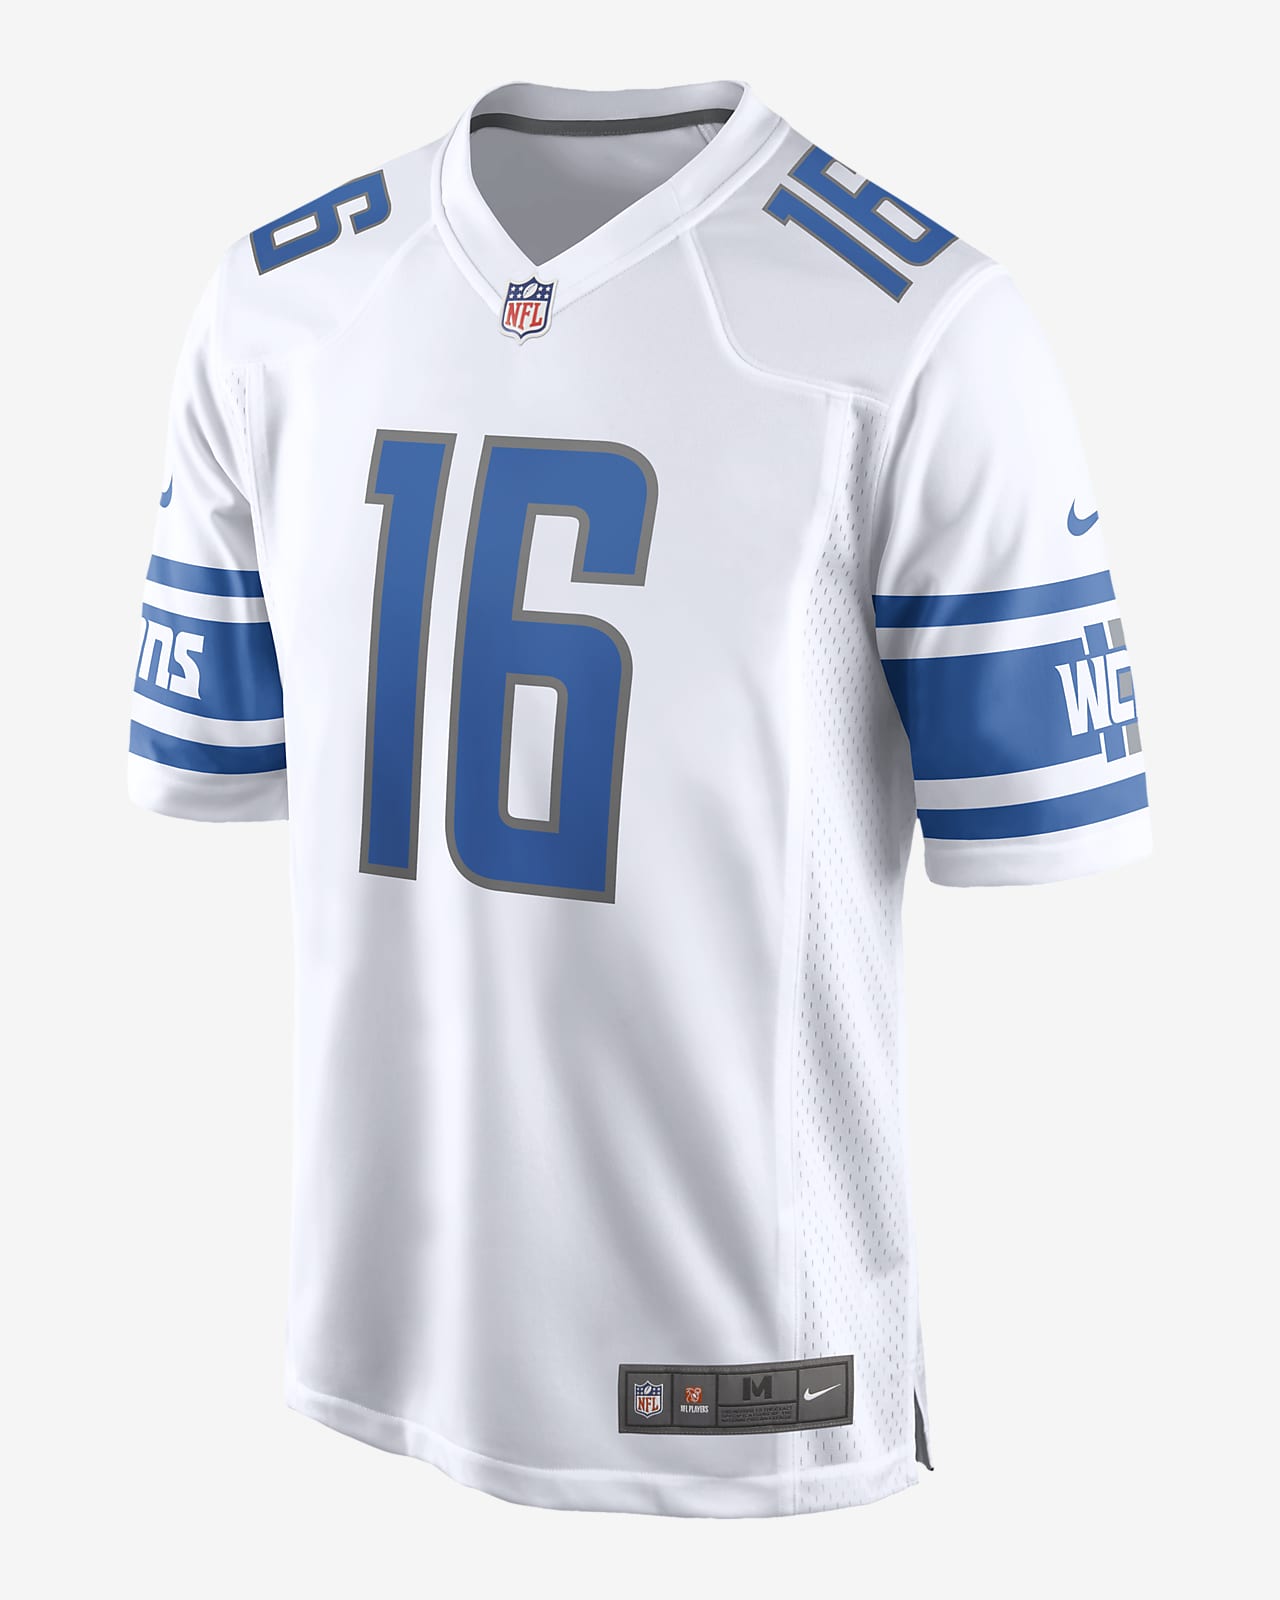 NFL Detroit Lions (Jared Goff) Men's Game Football Jersey.